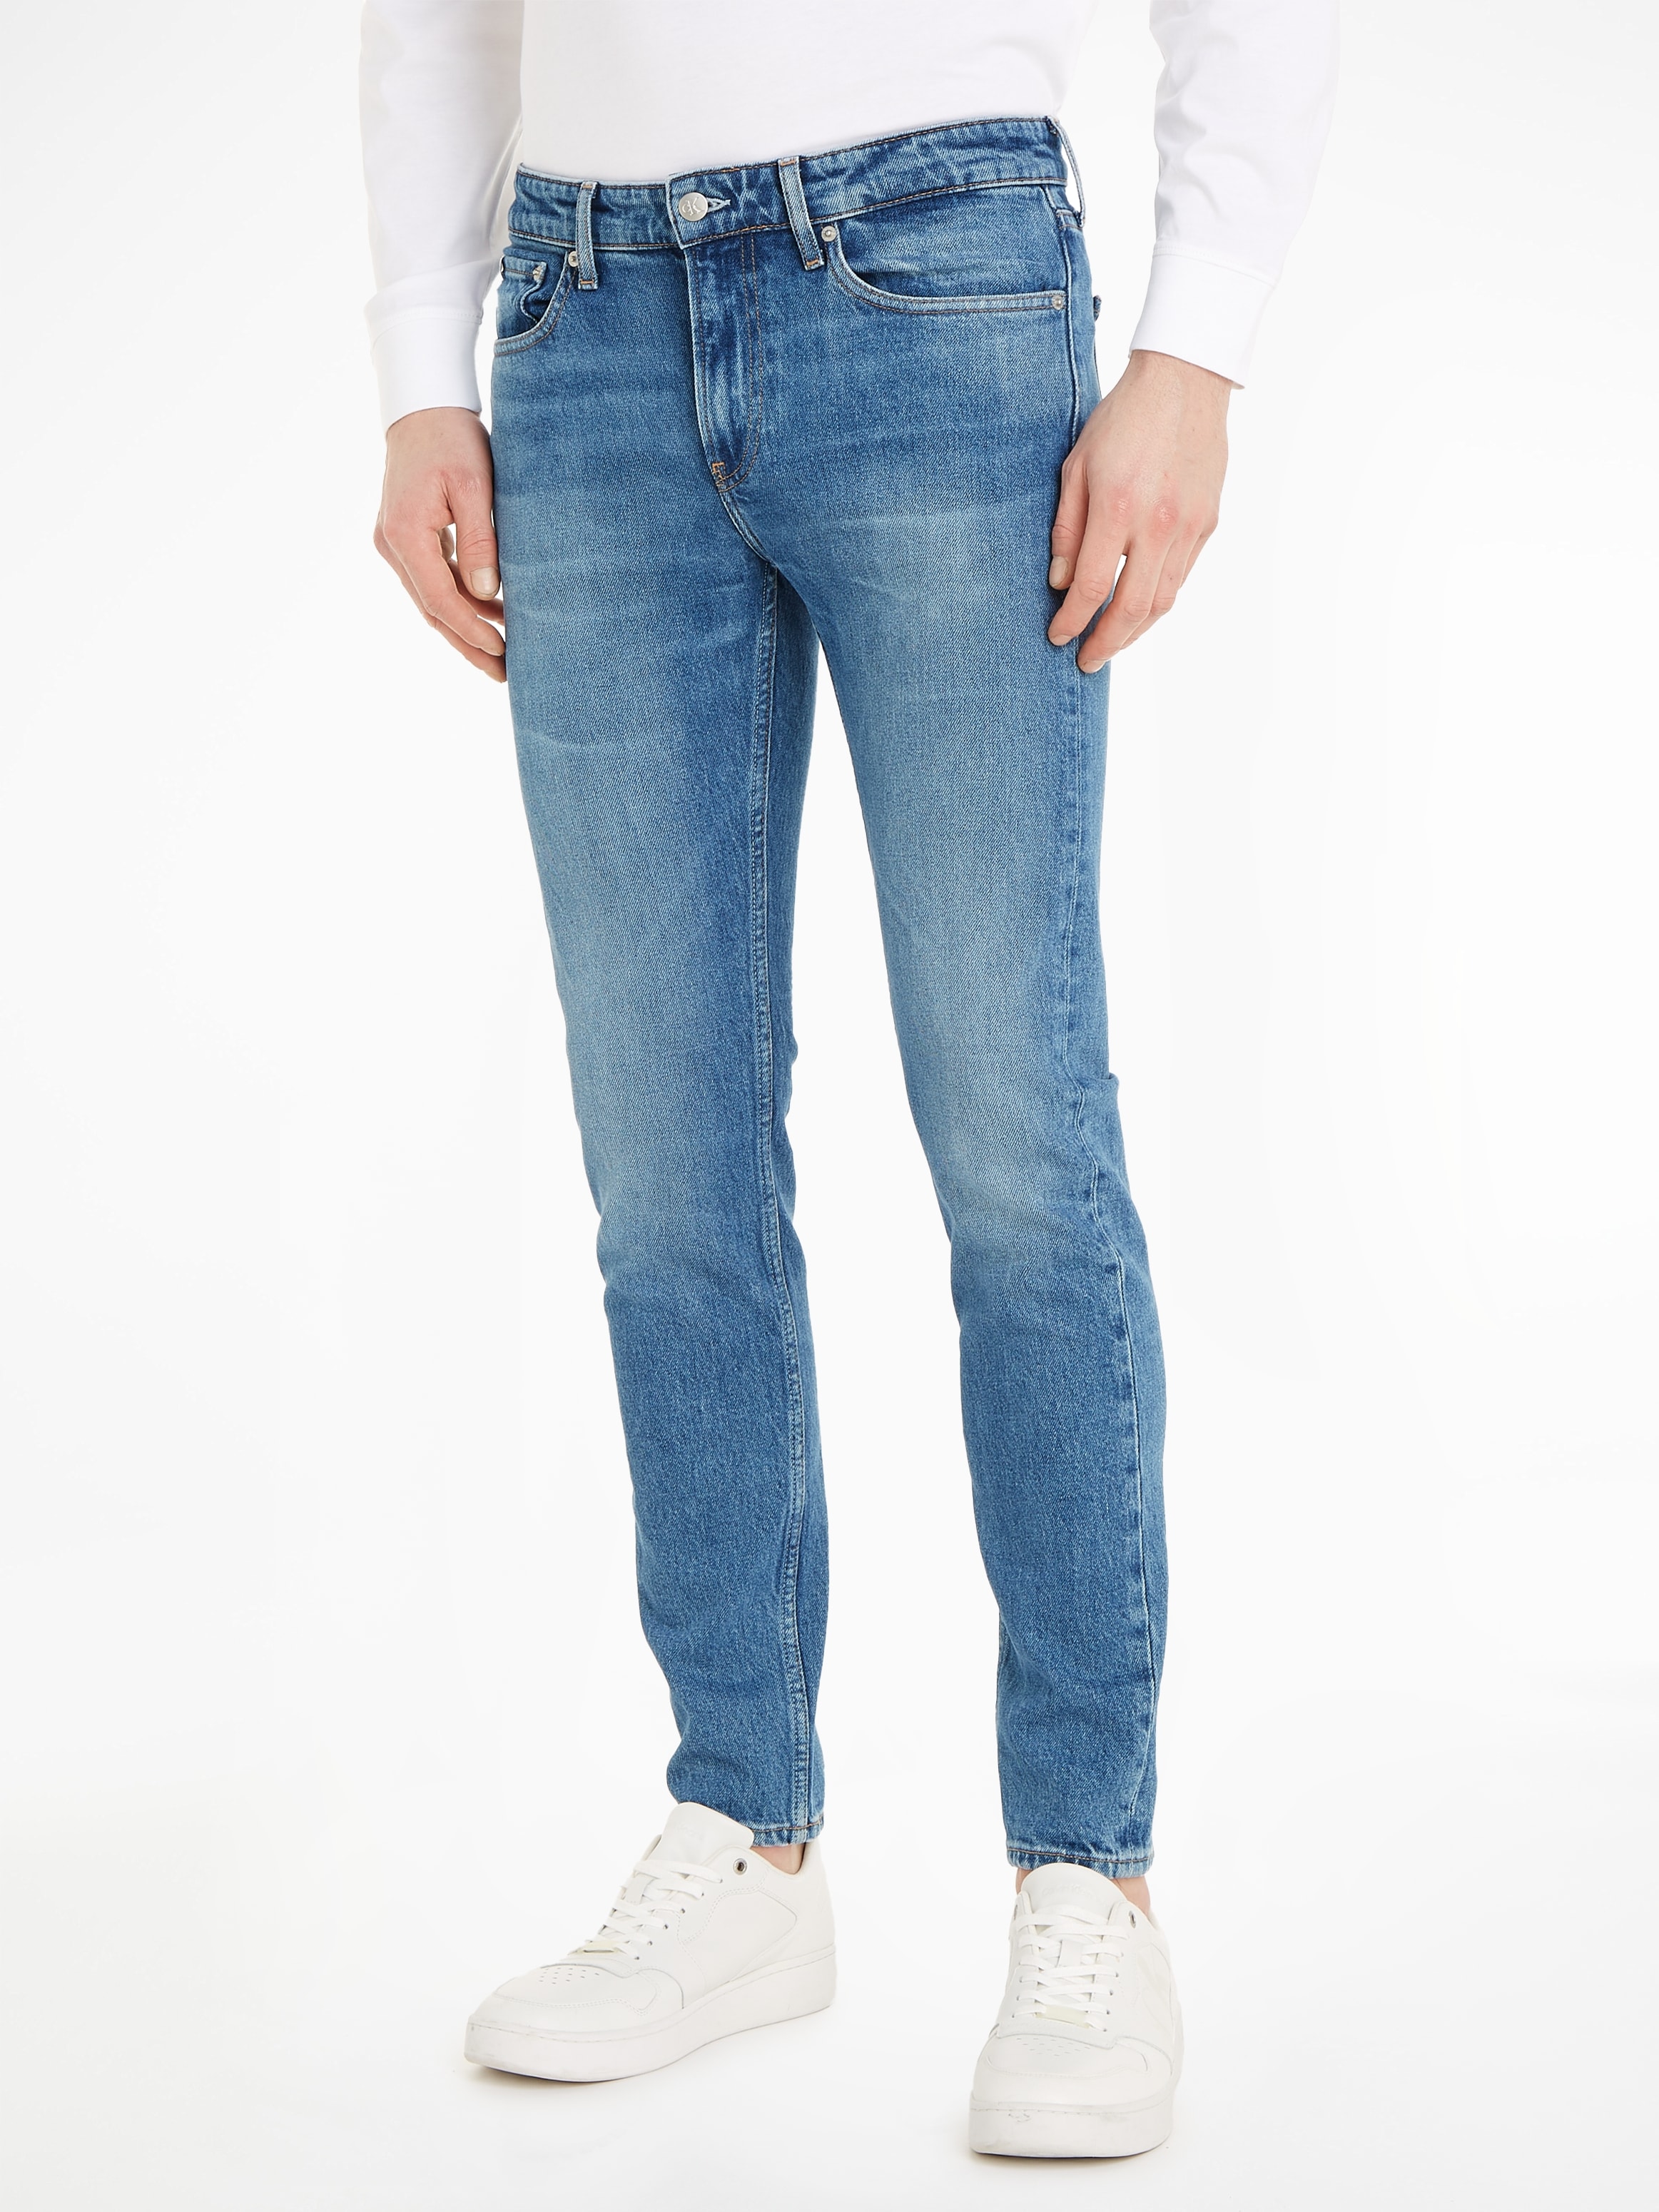 Calvin Klein Jeans Herren Schmaler Kegel Hose, Denim Light, 33W / 34L